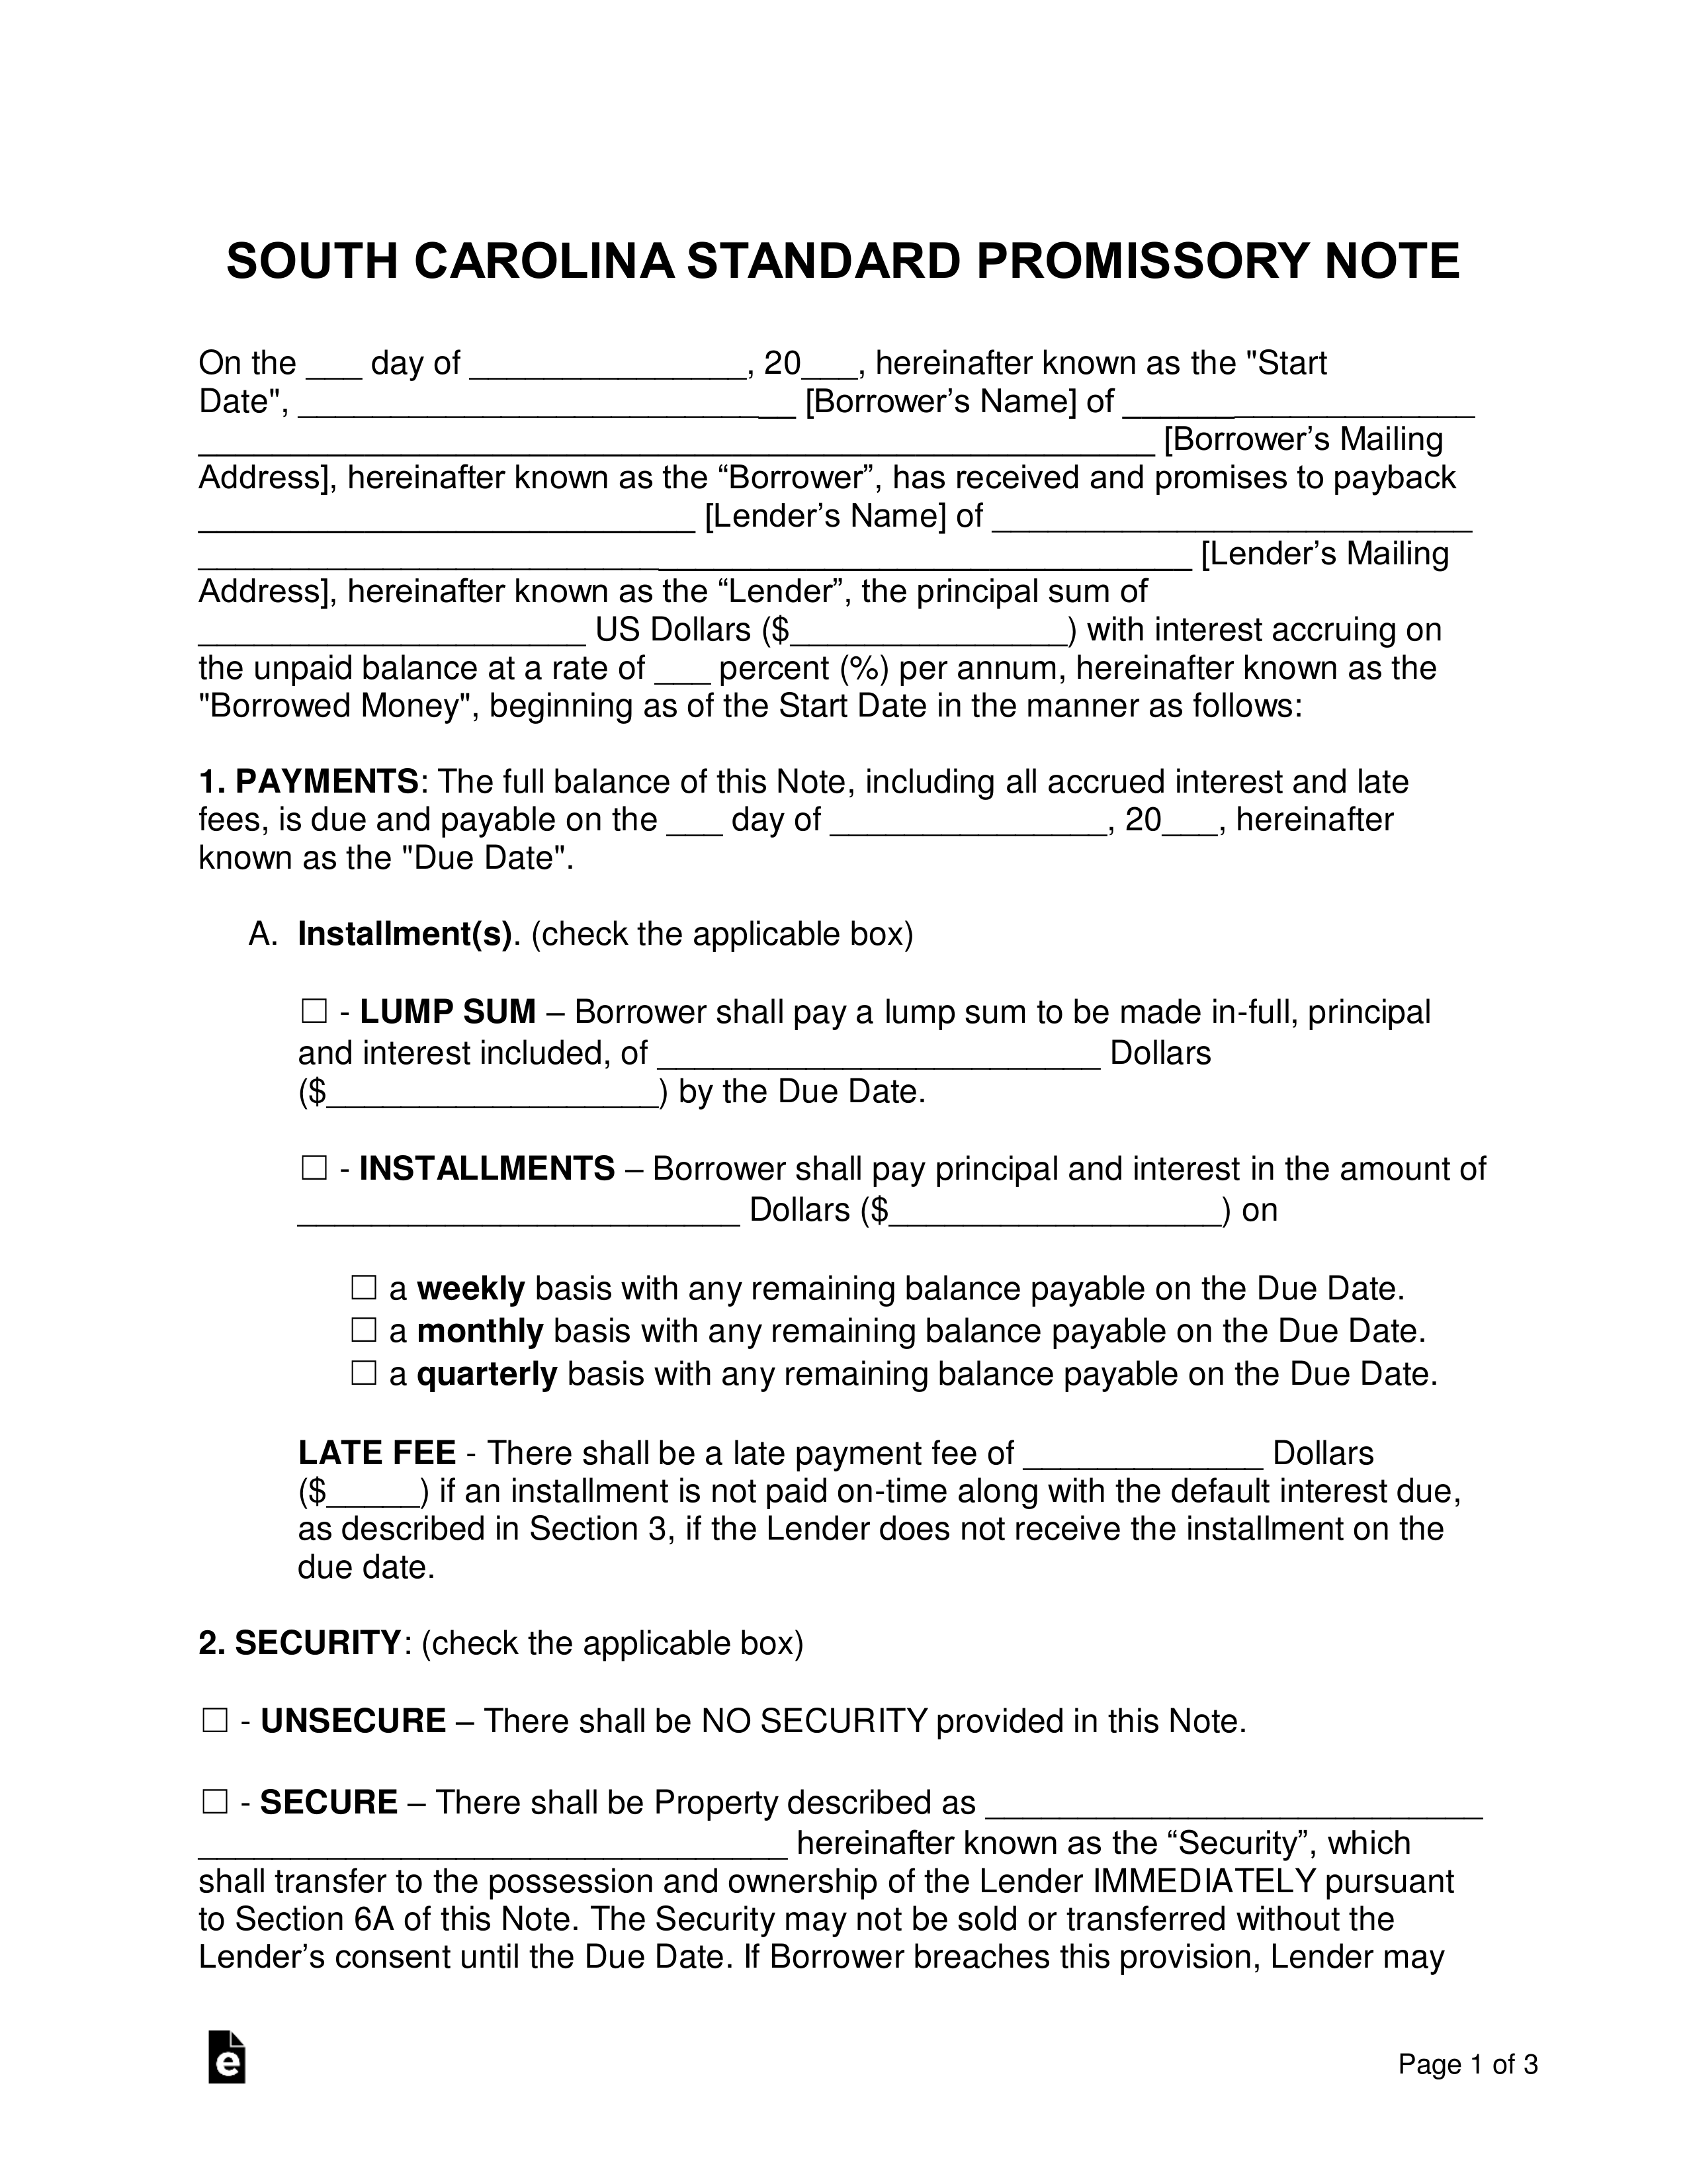 South Carolina Promissory Note Templates (2)